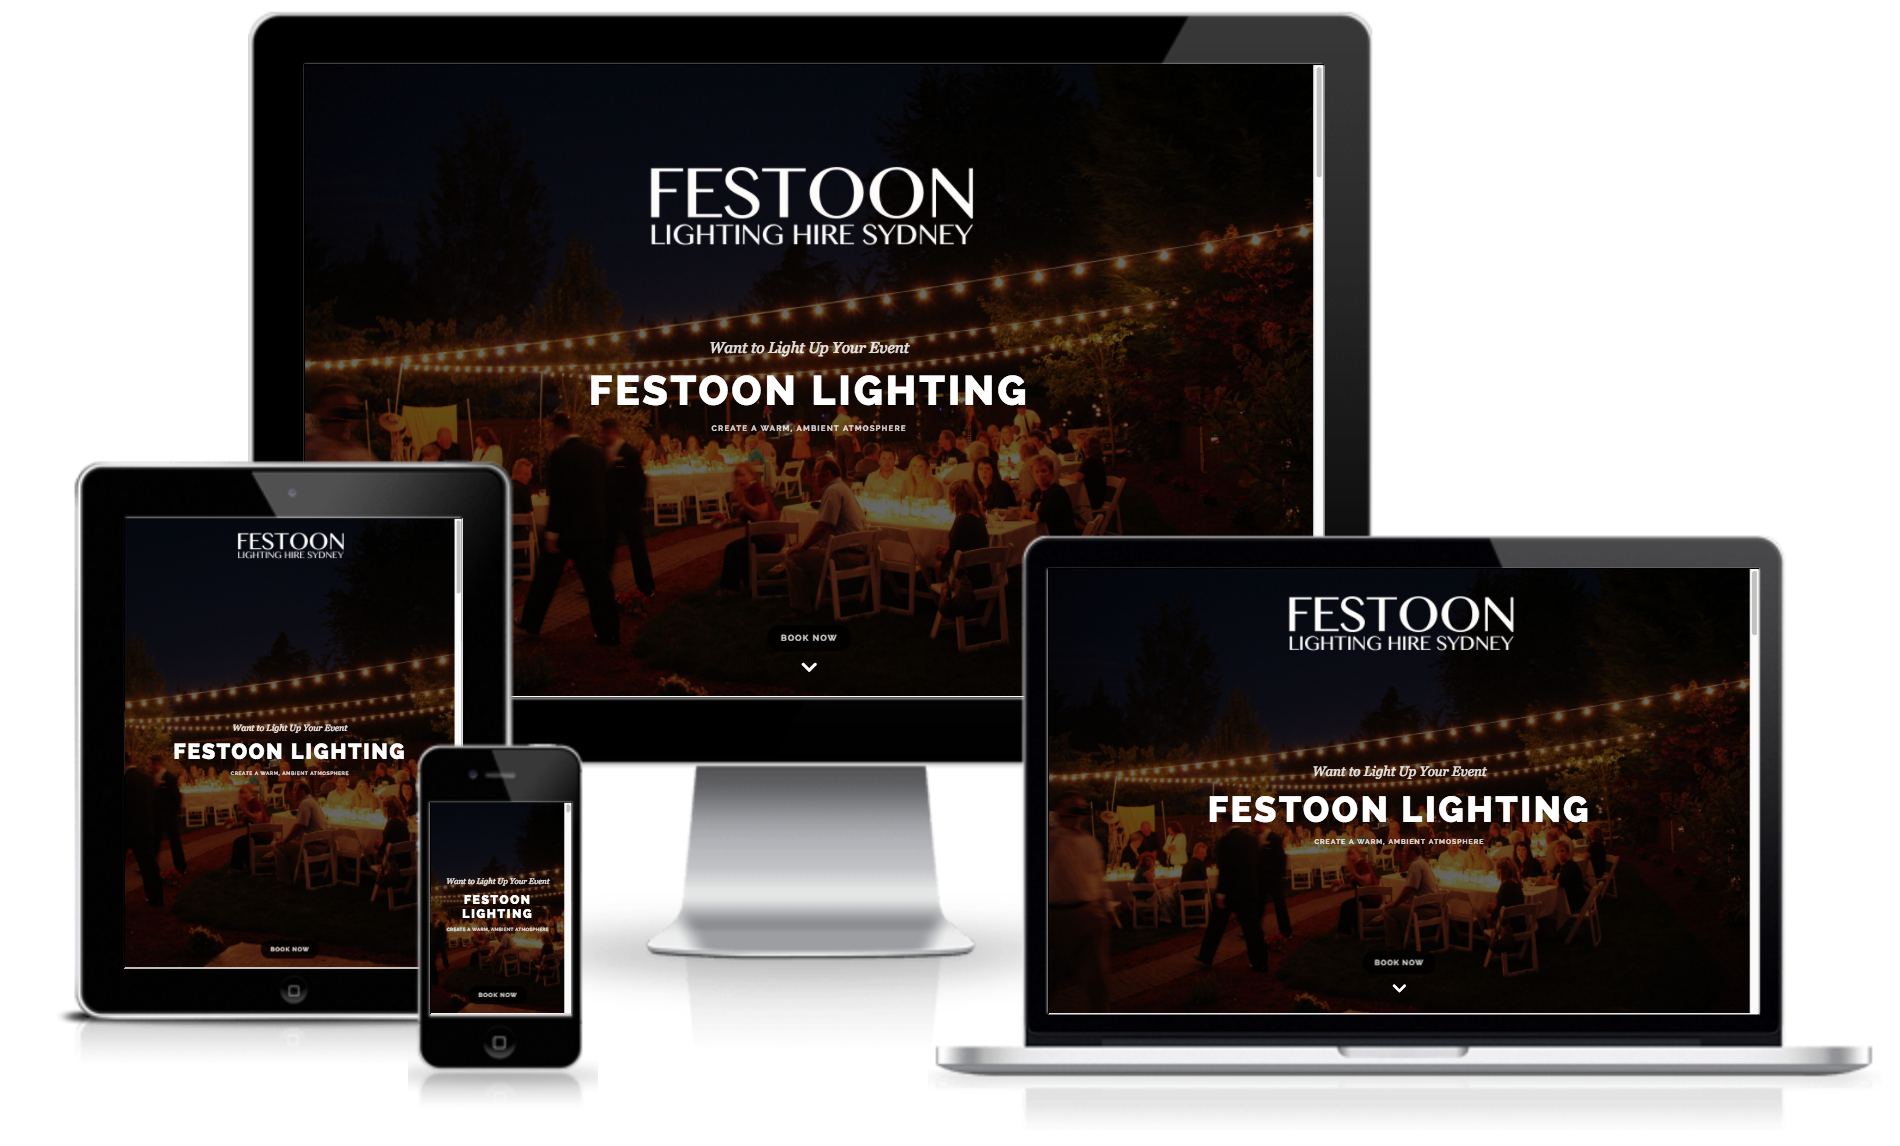 Festoon Lighting Hire Sydney